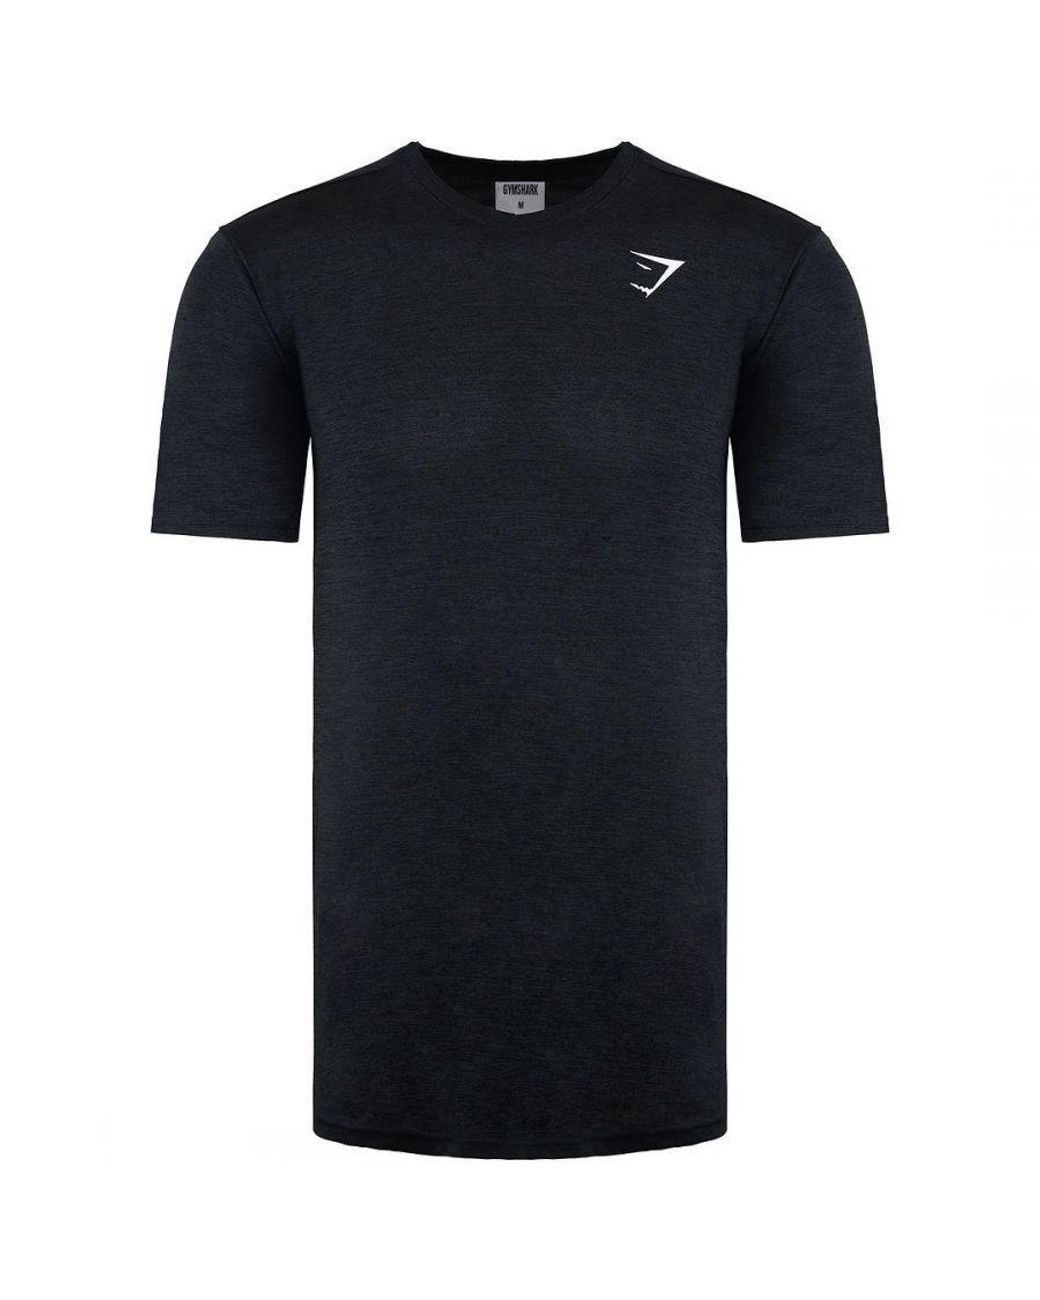 https://cdna.lystit.com/1040/1300/n/photos/secretsales/9e07141b/gymshark-Black-Arrival-Slim-Black-T-shirt.jpeg